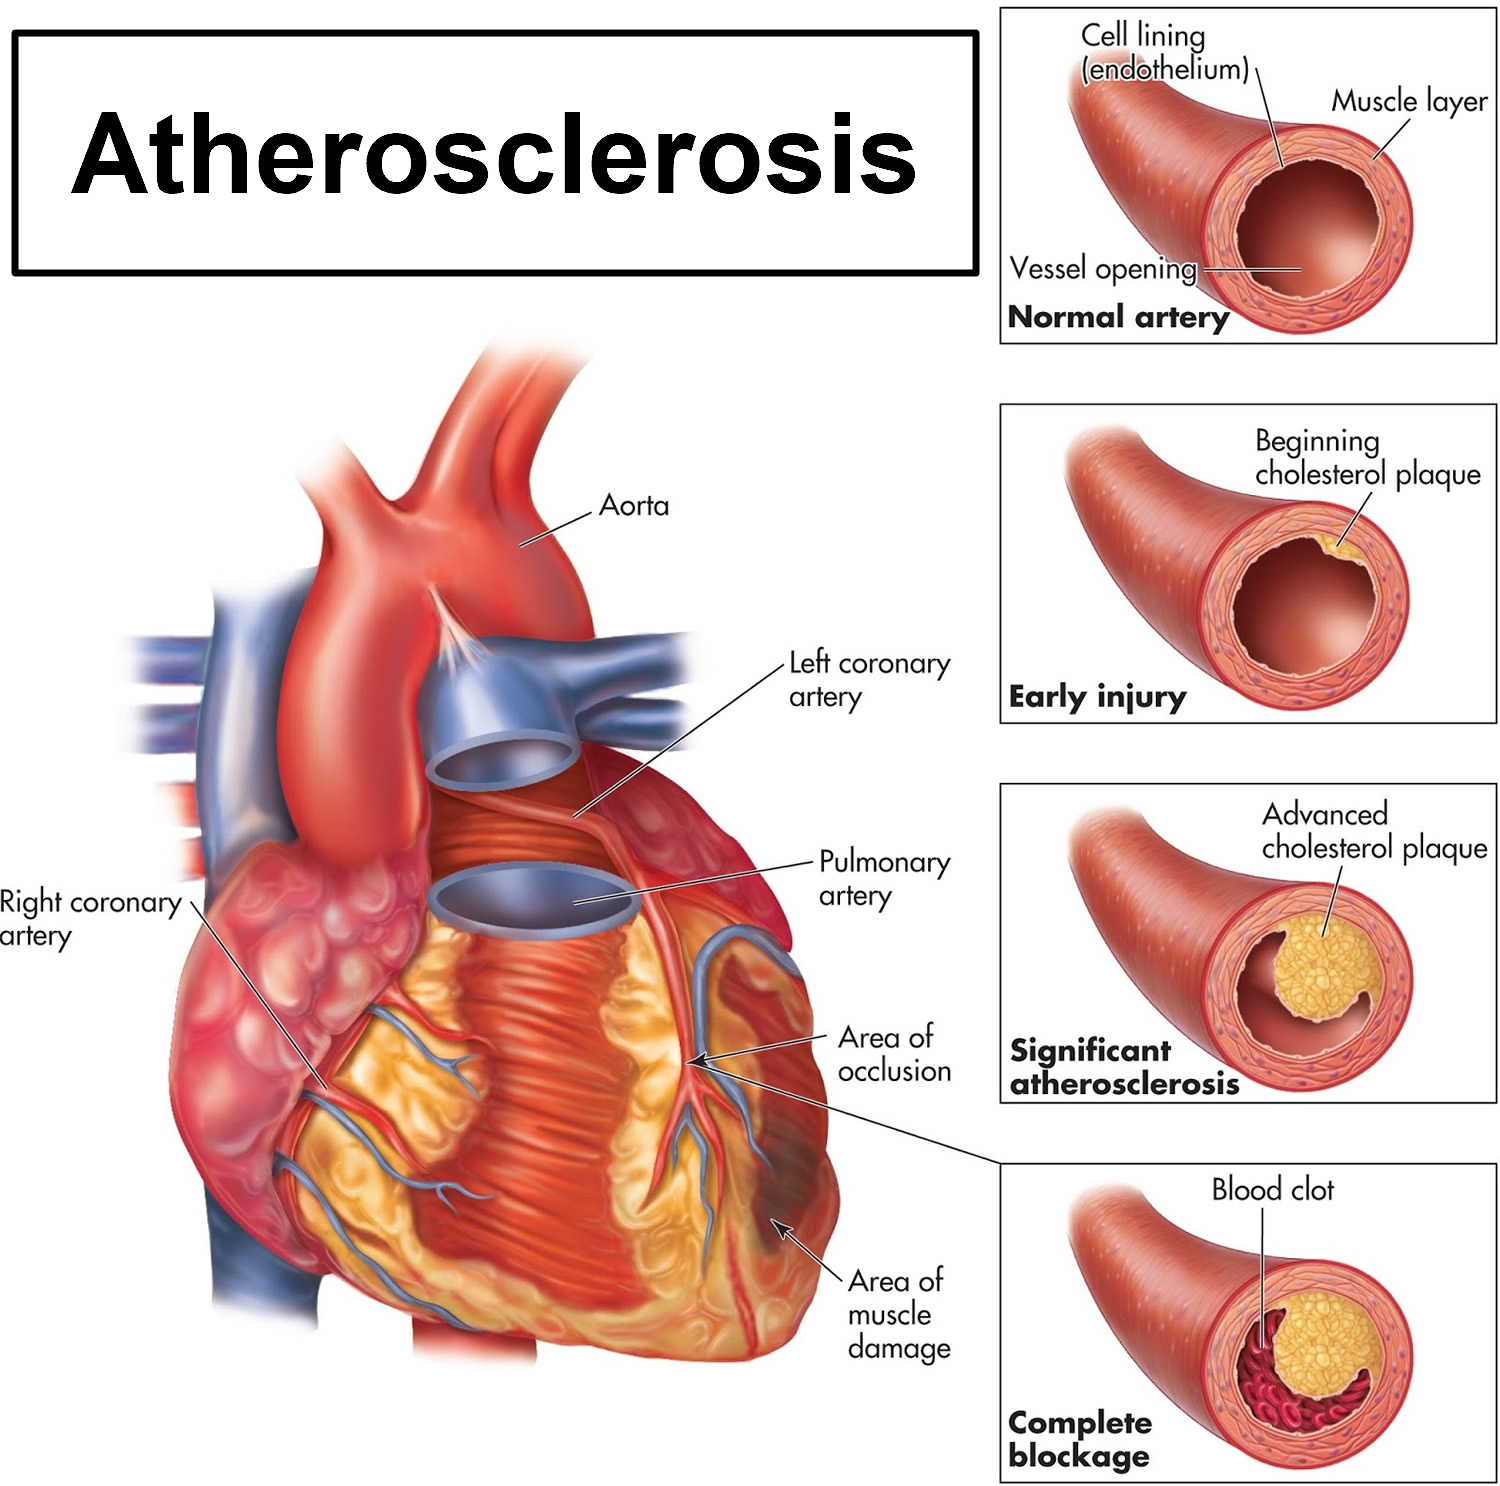 Atherosclerosis Causes, Risk Factors, Symptoms, Diagnosis & Treatment